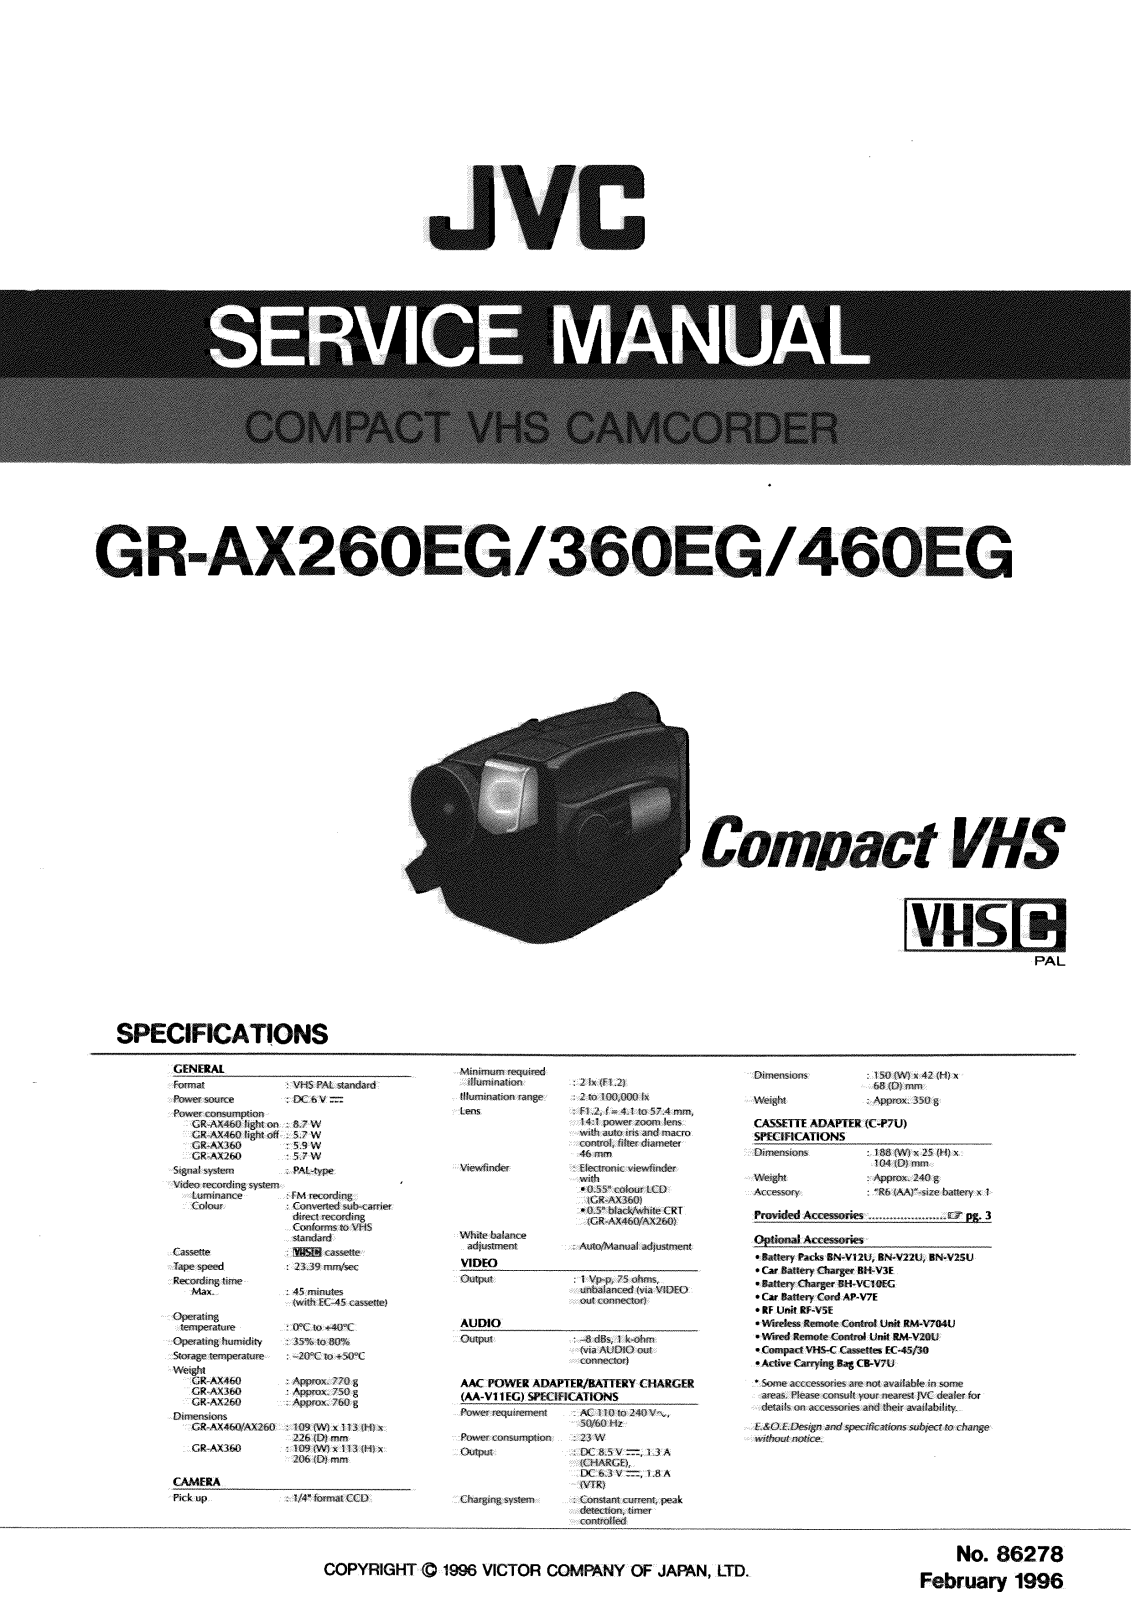 JVC GR-AX260EG, GR-AX360EG, GR-AX460EG Service Manual